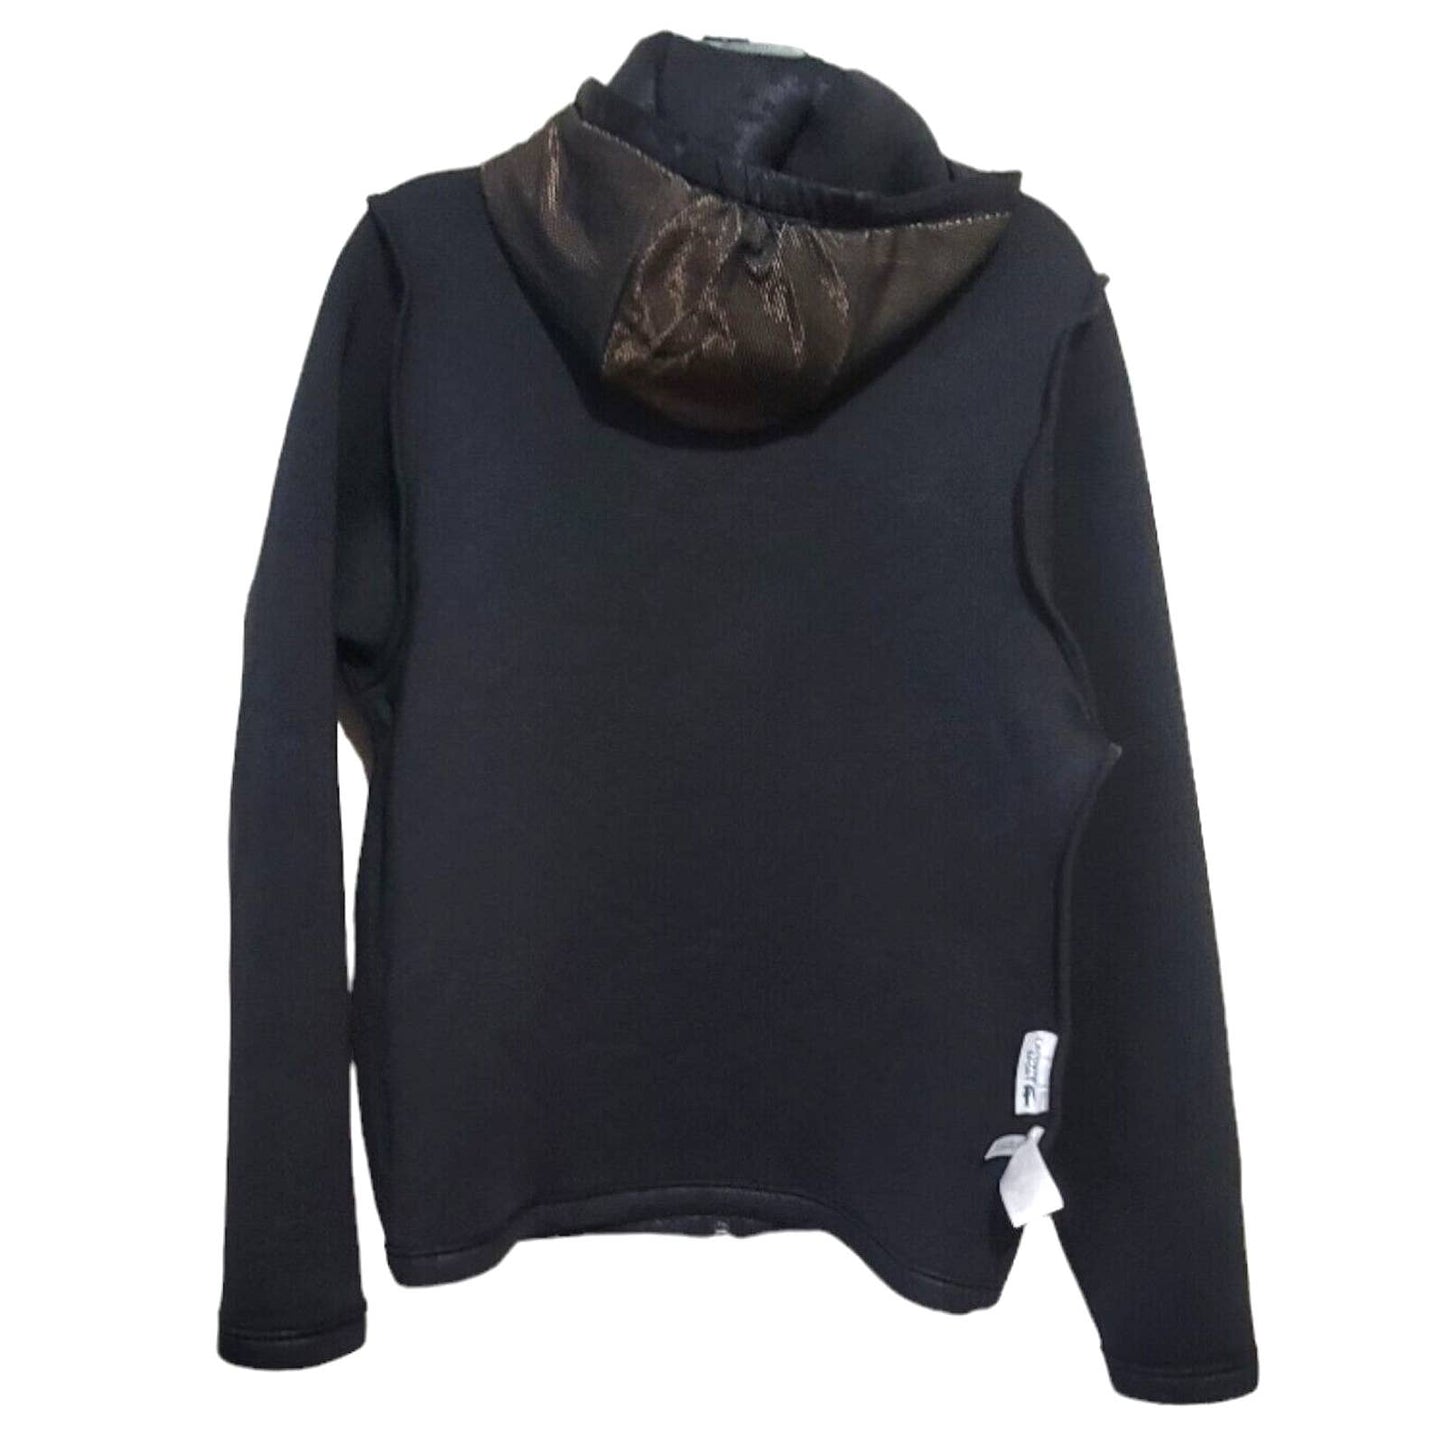 (Used) Lacoste Hooded Zip Men Sweatshirt Size M